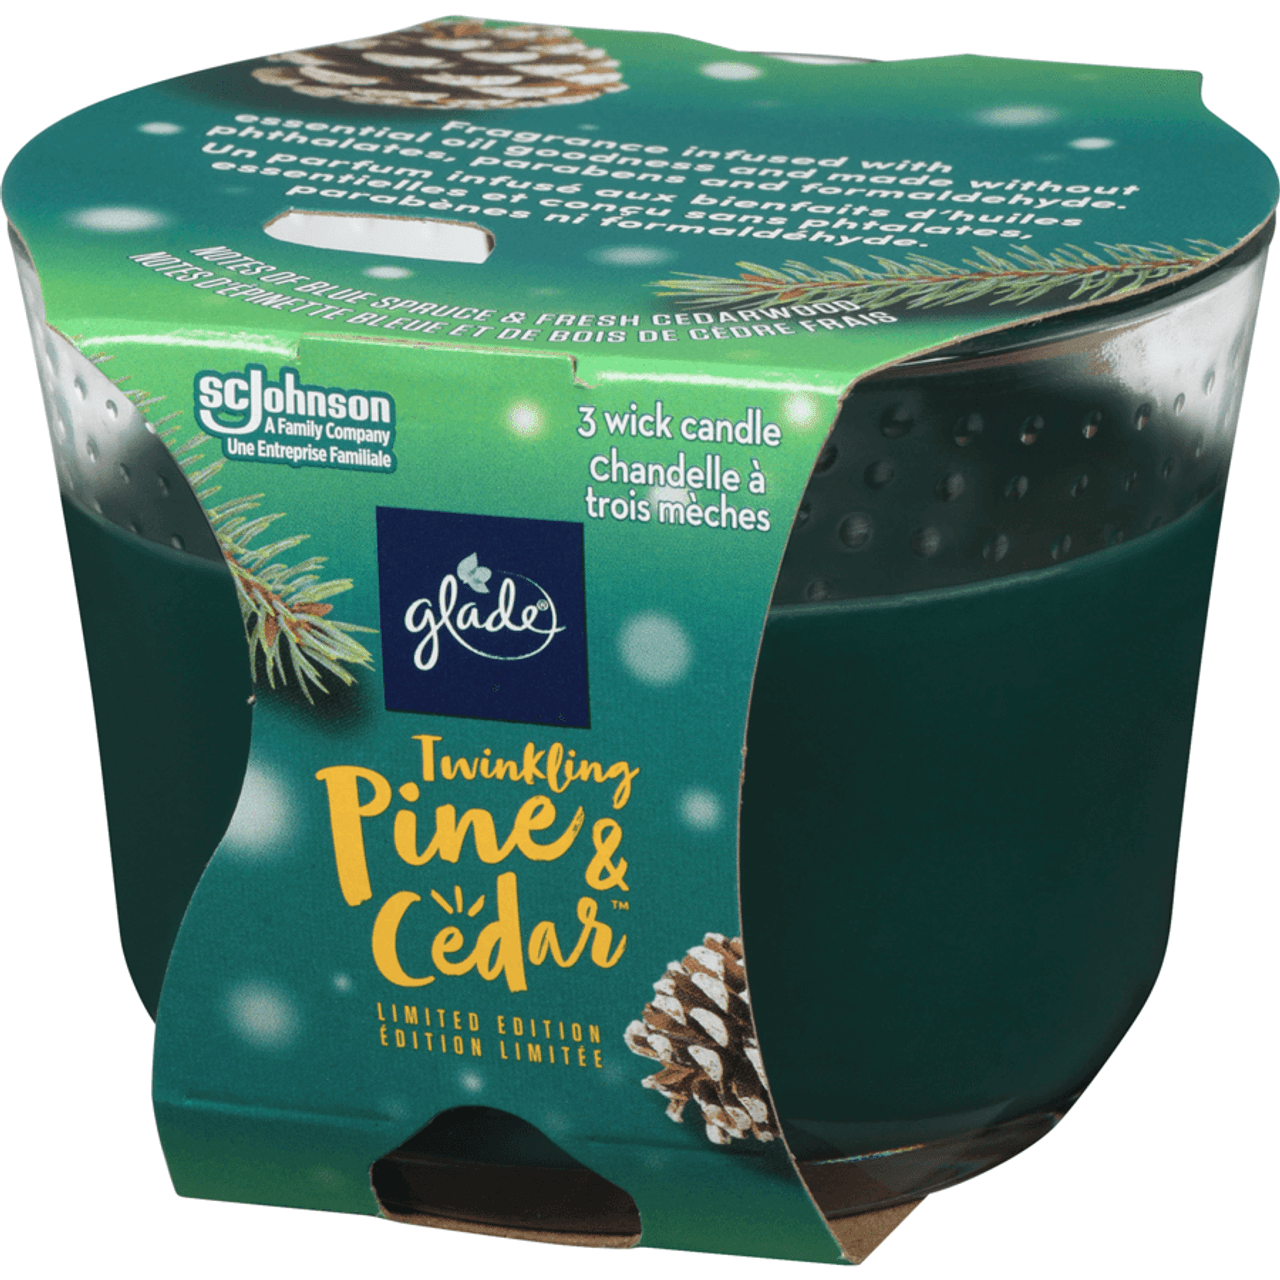 Glade Pine Wonderland Limited Edition 3-Wick Candle(4/Case)-Chicken Pieces